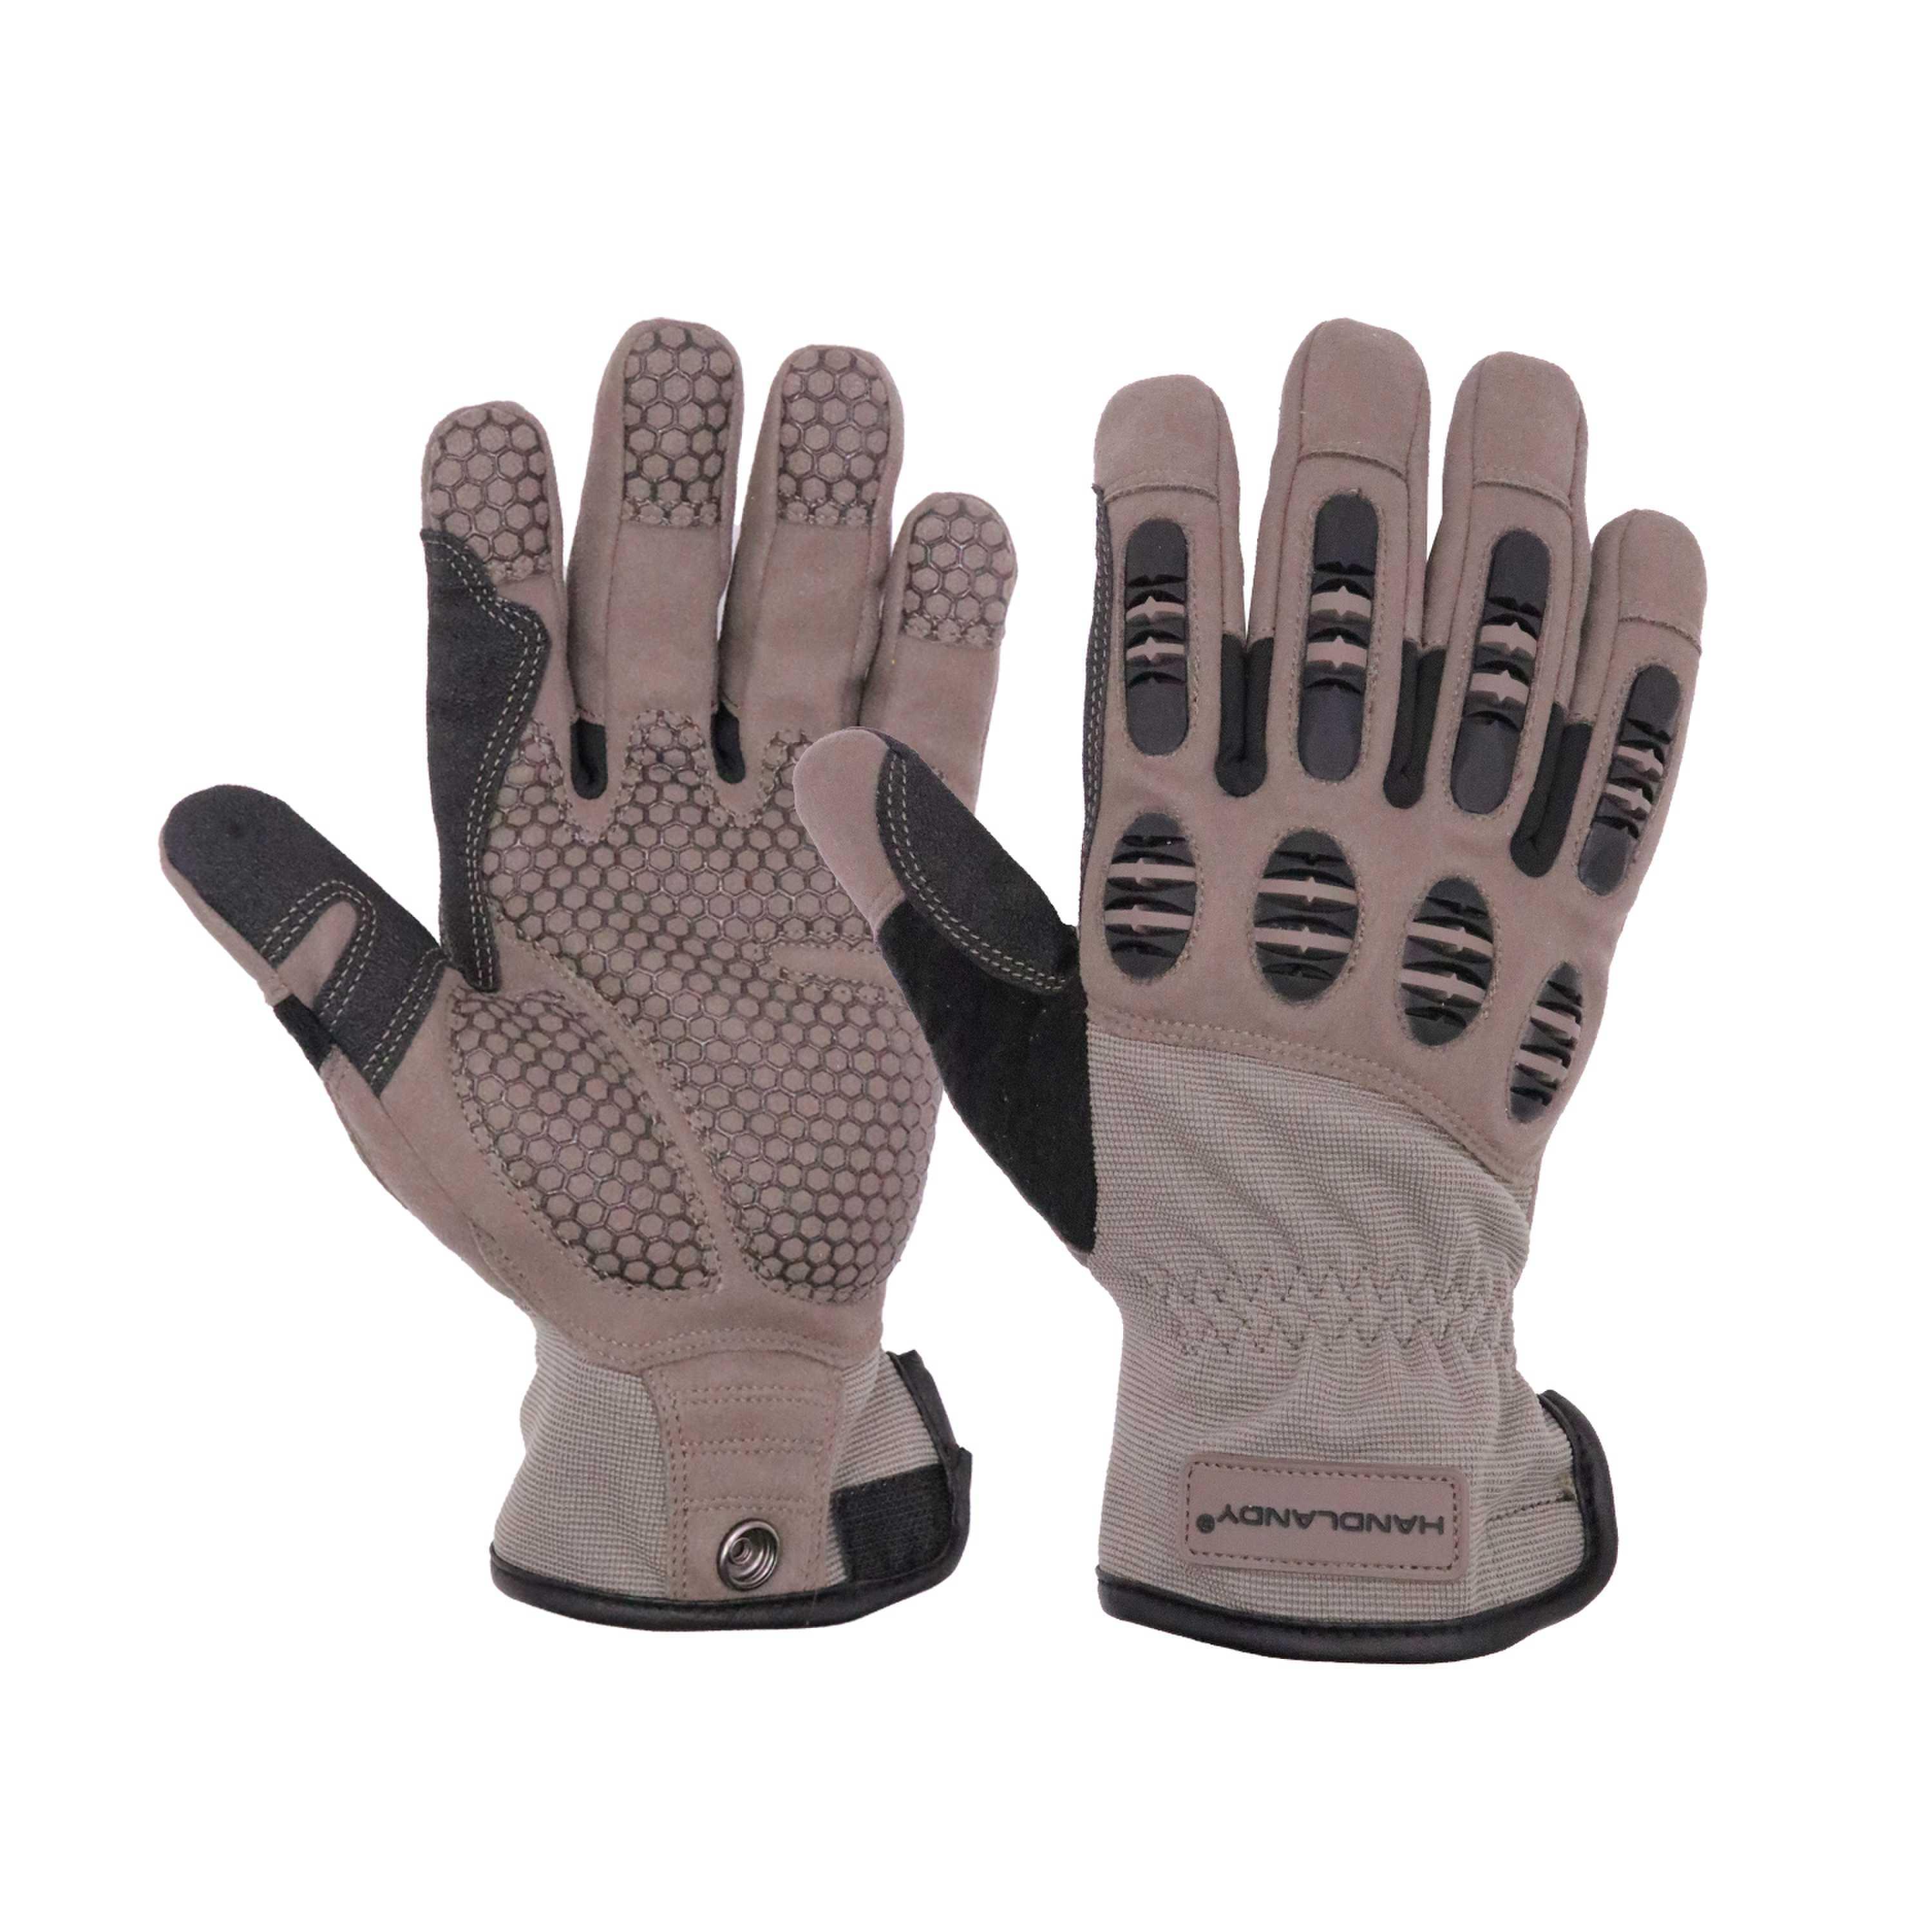 6120 PRISAFETY Safety Work Gloves for Men General Utility Work Gloves TPR Impact Reducing Work Gloves, Non-Slip Breathable Mechanics Gloves